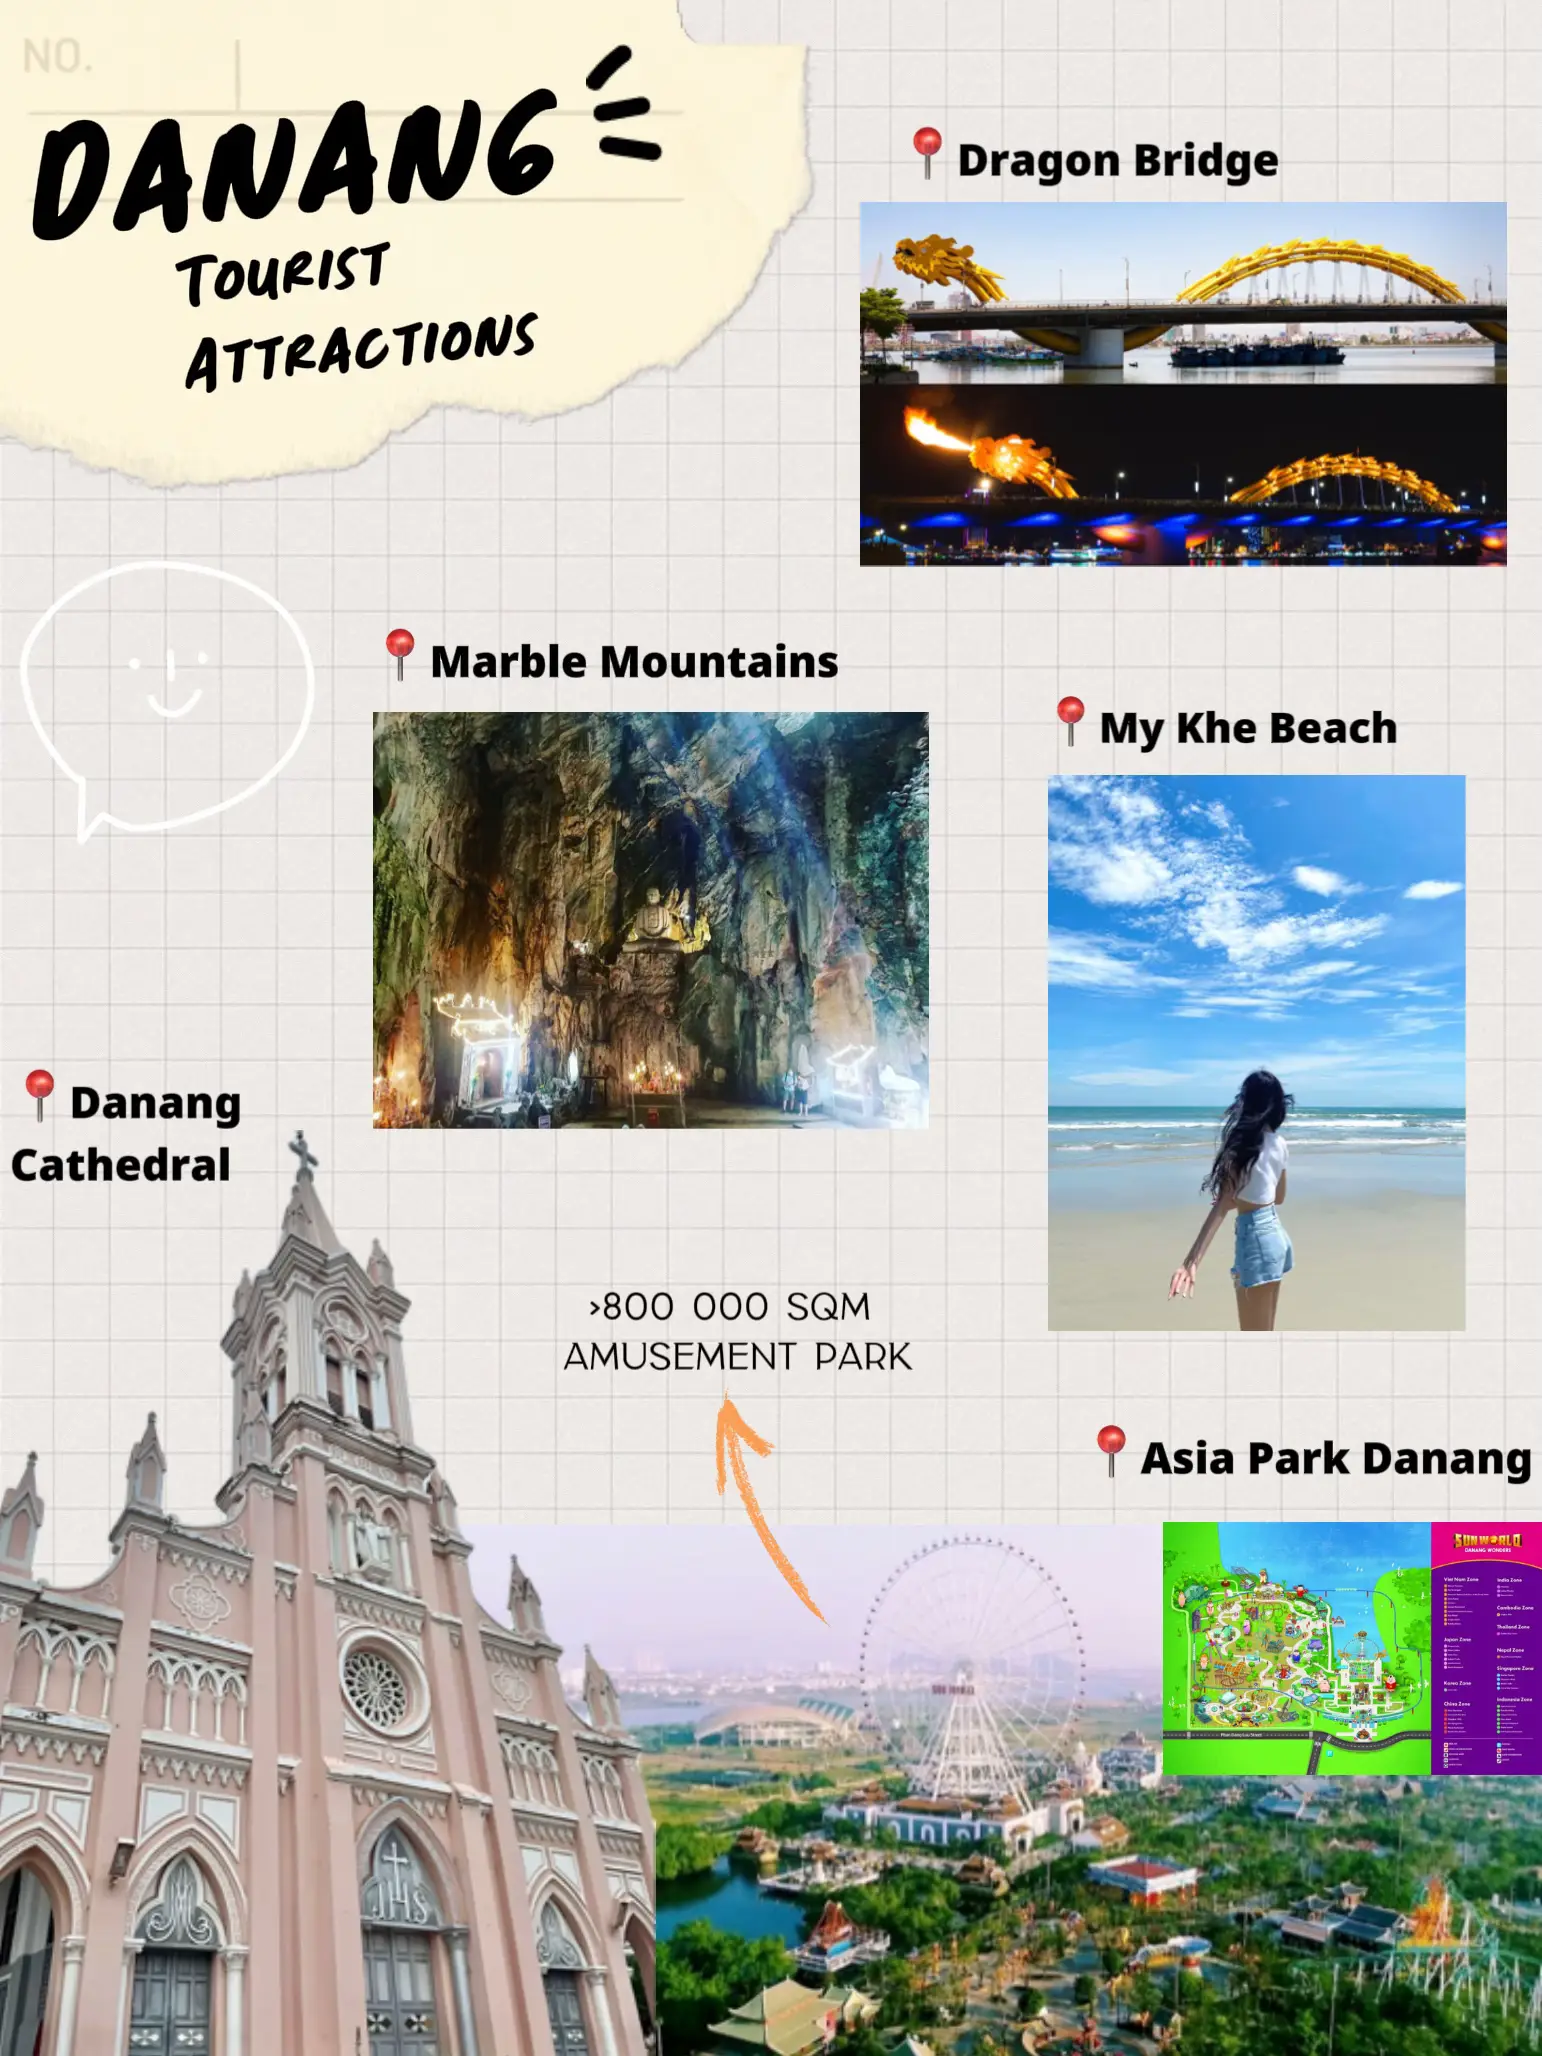 Ultimate travel guideㅣ Danang & Hoi An🇻🇳's images(5)